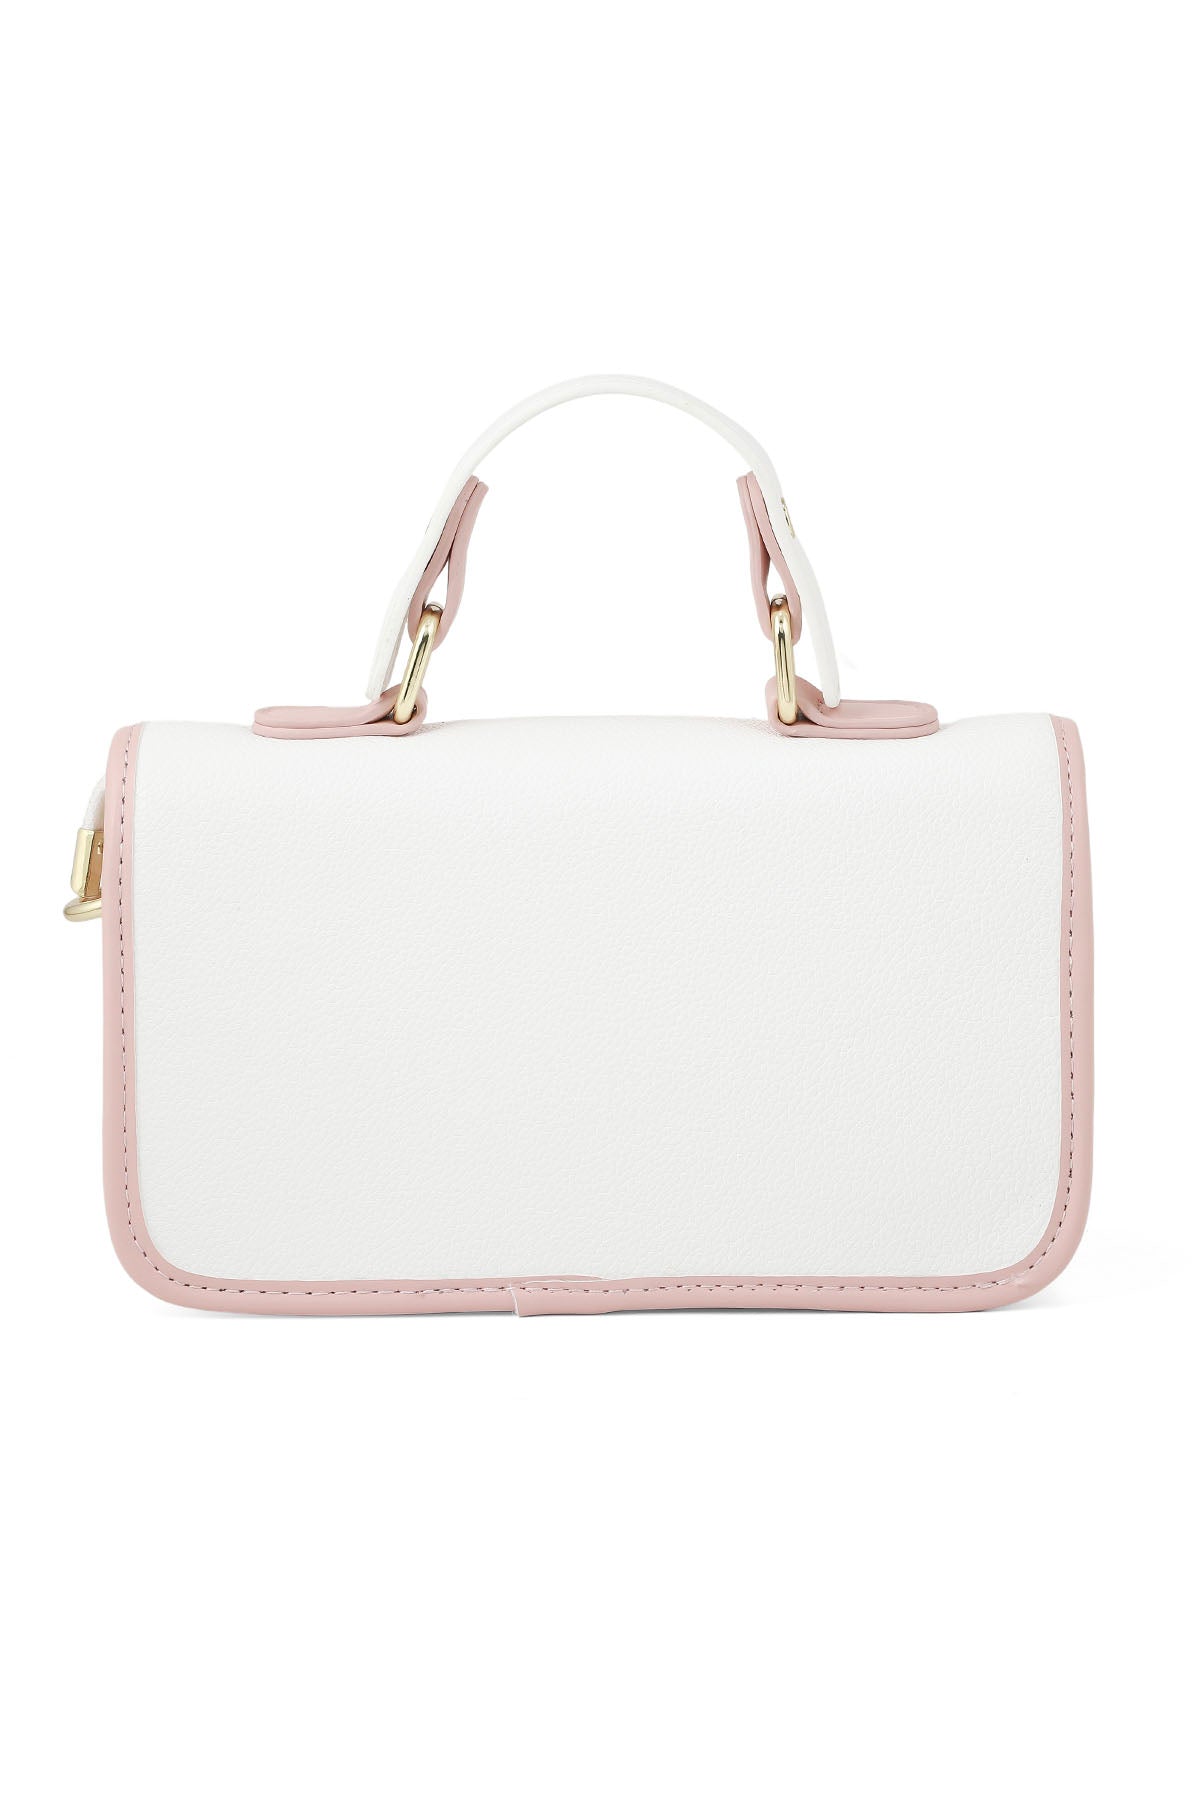 Top Handle Hand Bags B14949-Pink